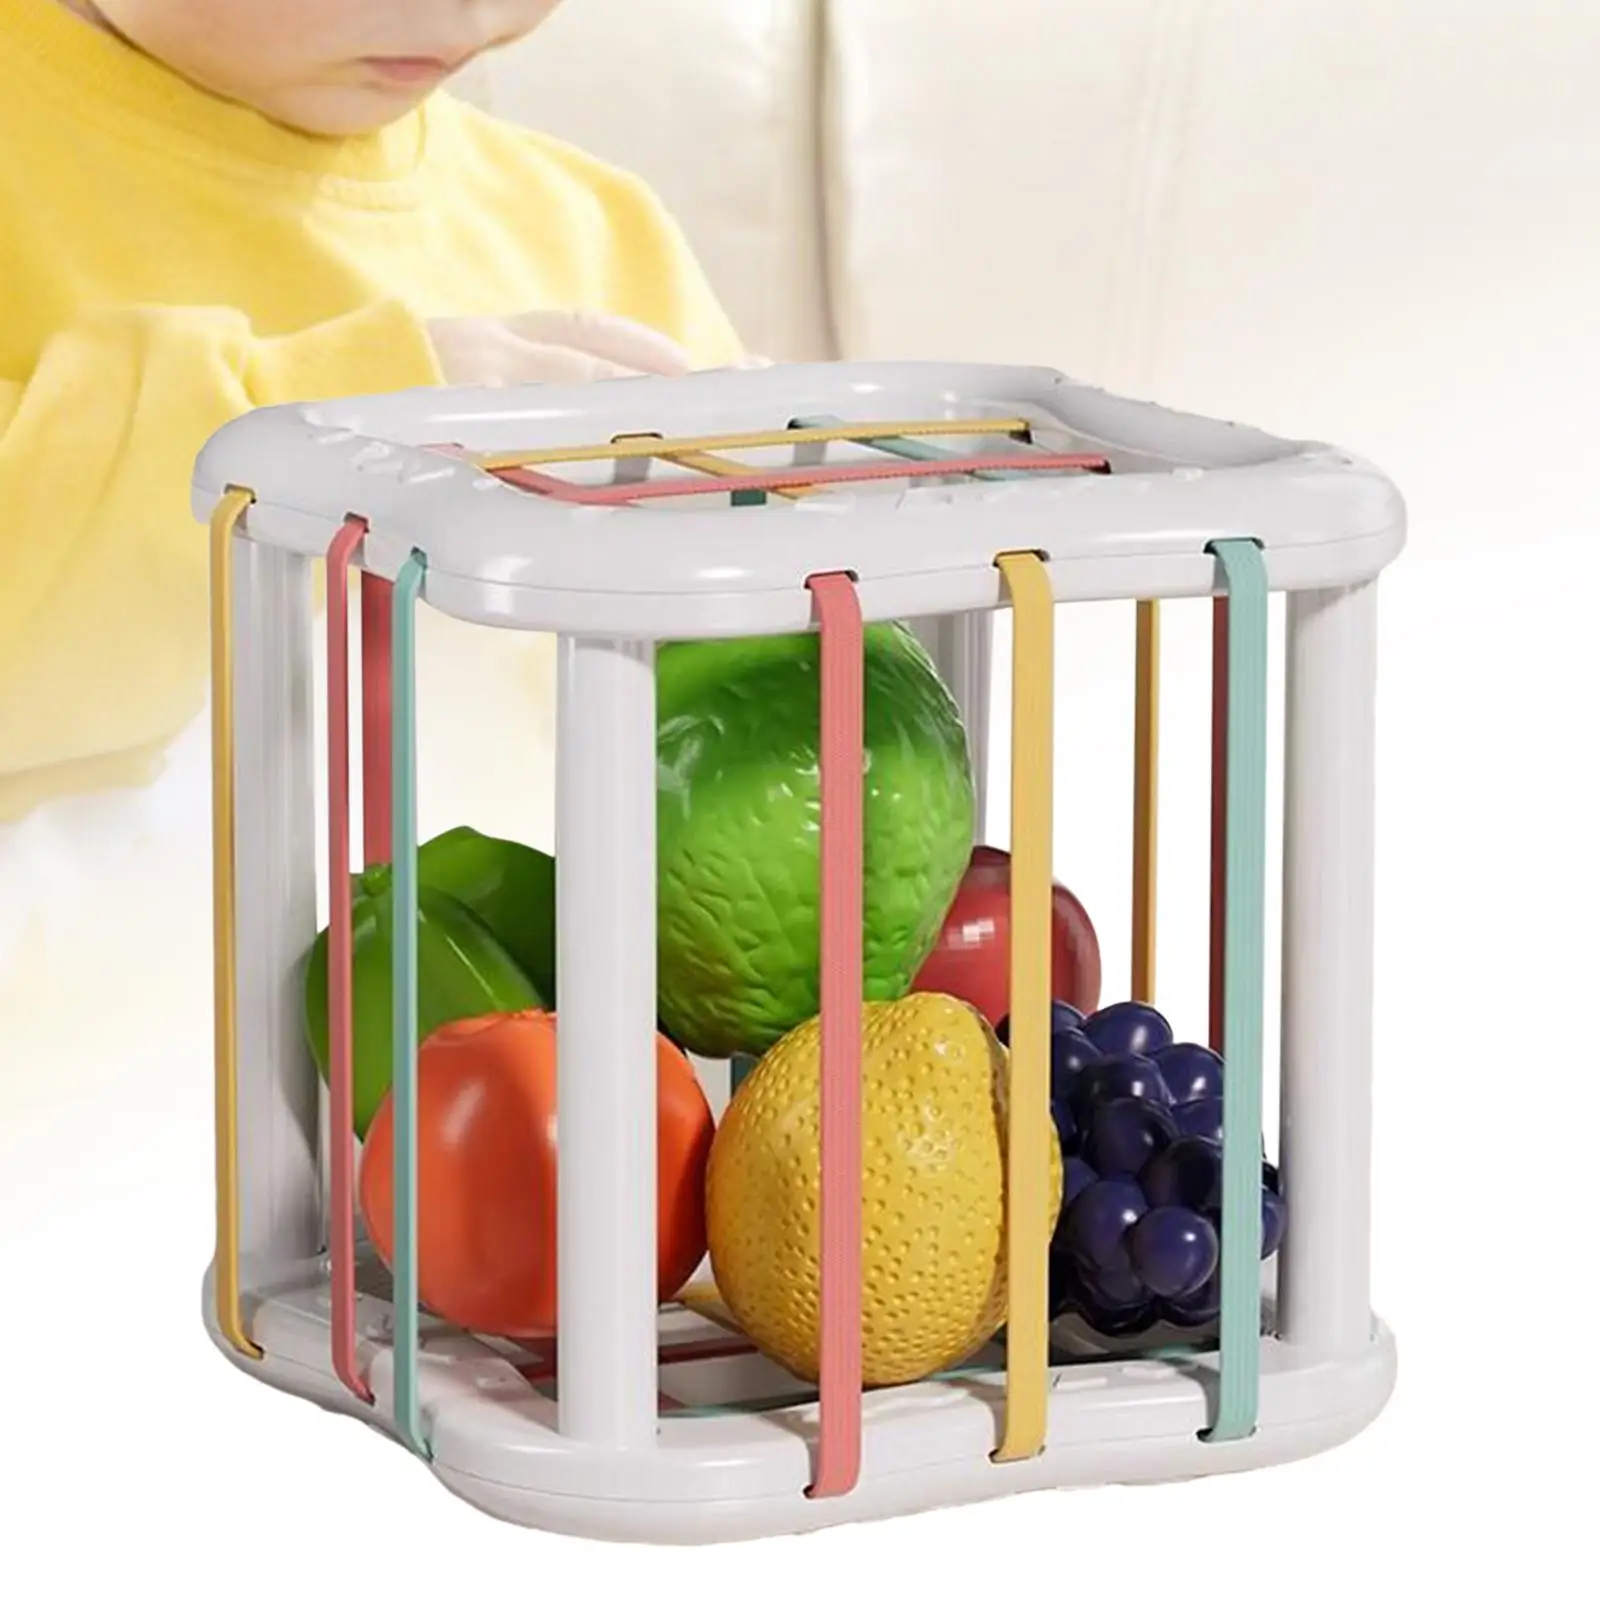 Baby Shape Sorter Toy Montessori Fine Motor Skills Cube Sensory Sorting Baby Toy for Kids Children Girls Boys Age 1 2 3 Gifts